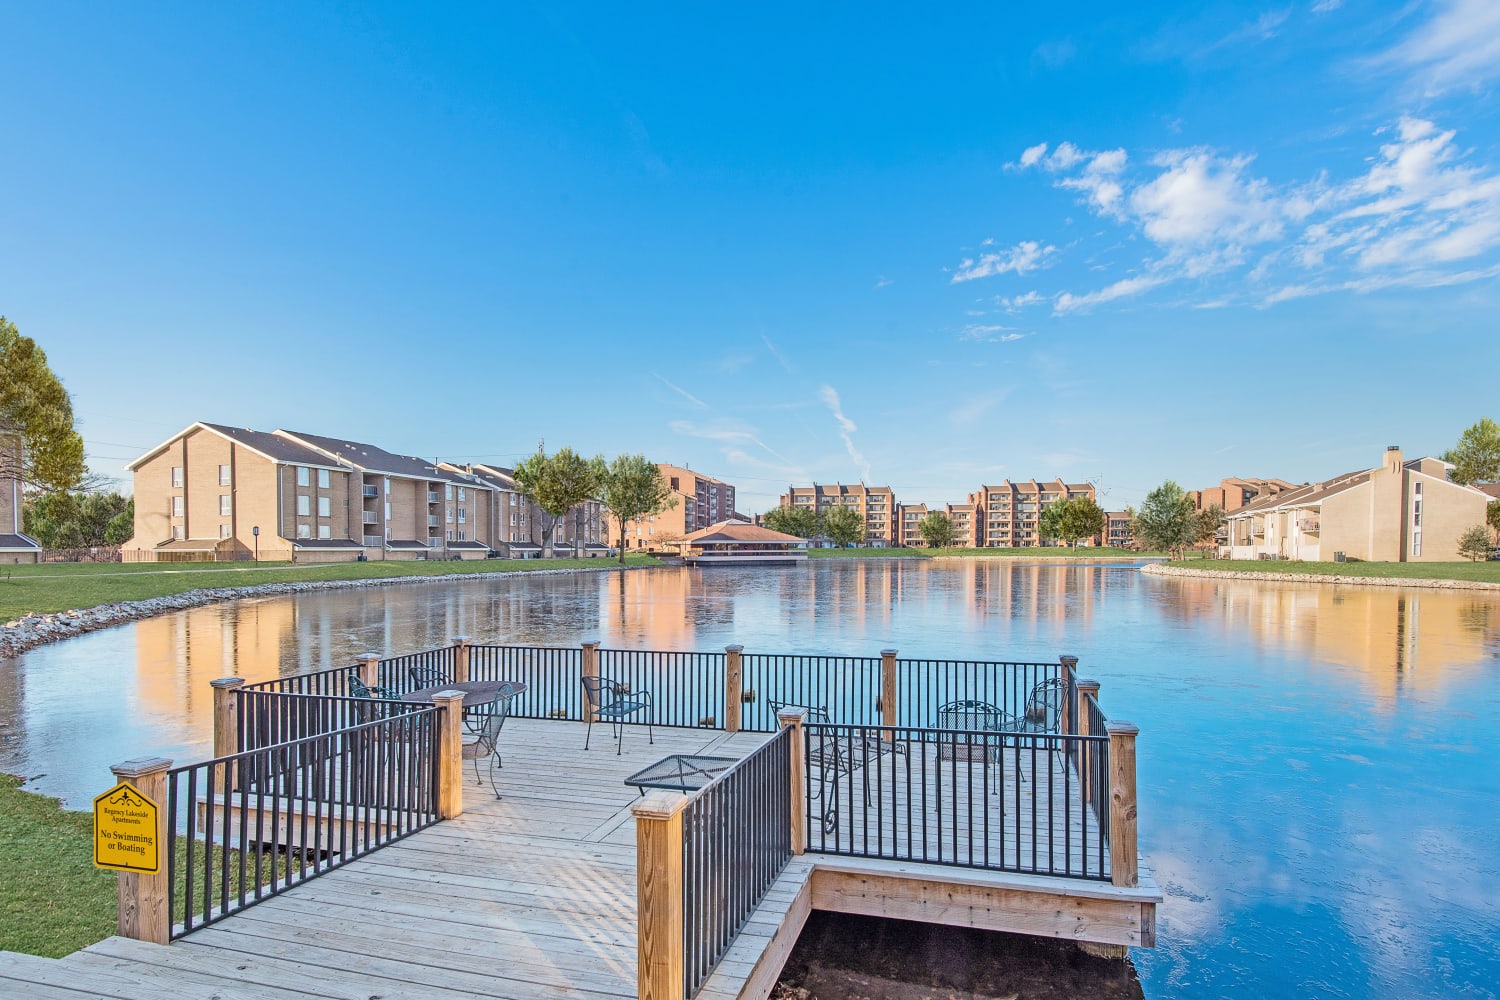 Pier and view of Regency Lakeside Apartment Homes across the lake in Omaha, Nebraska